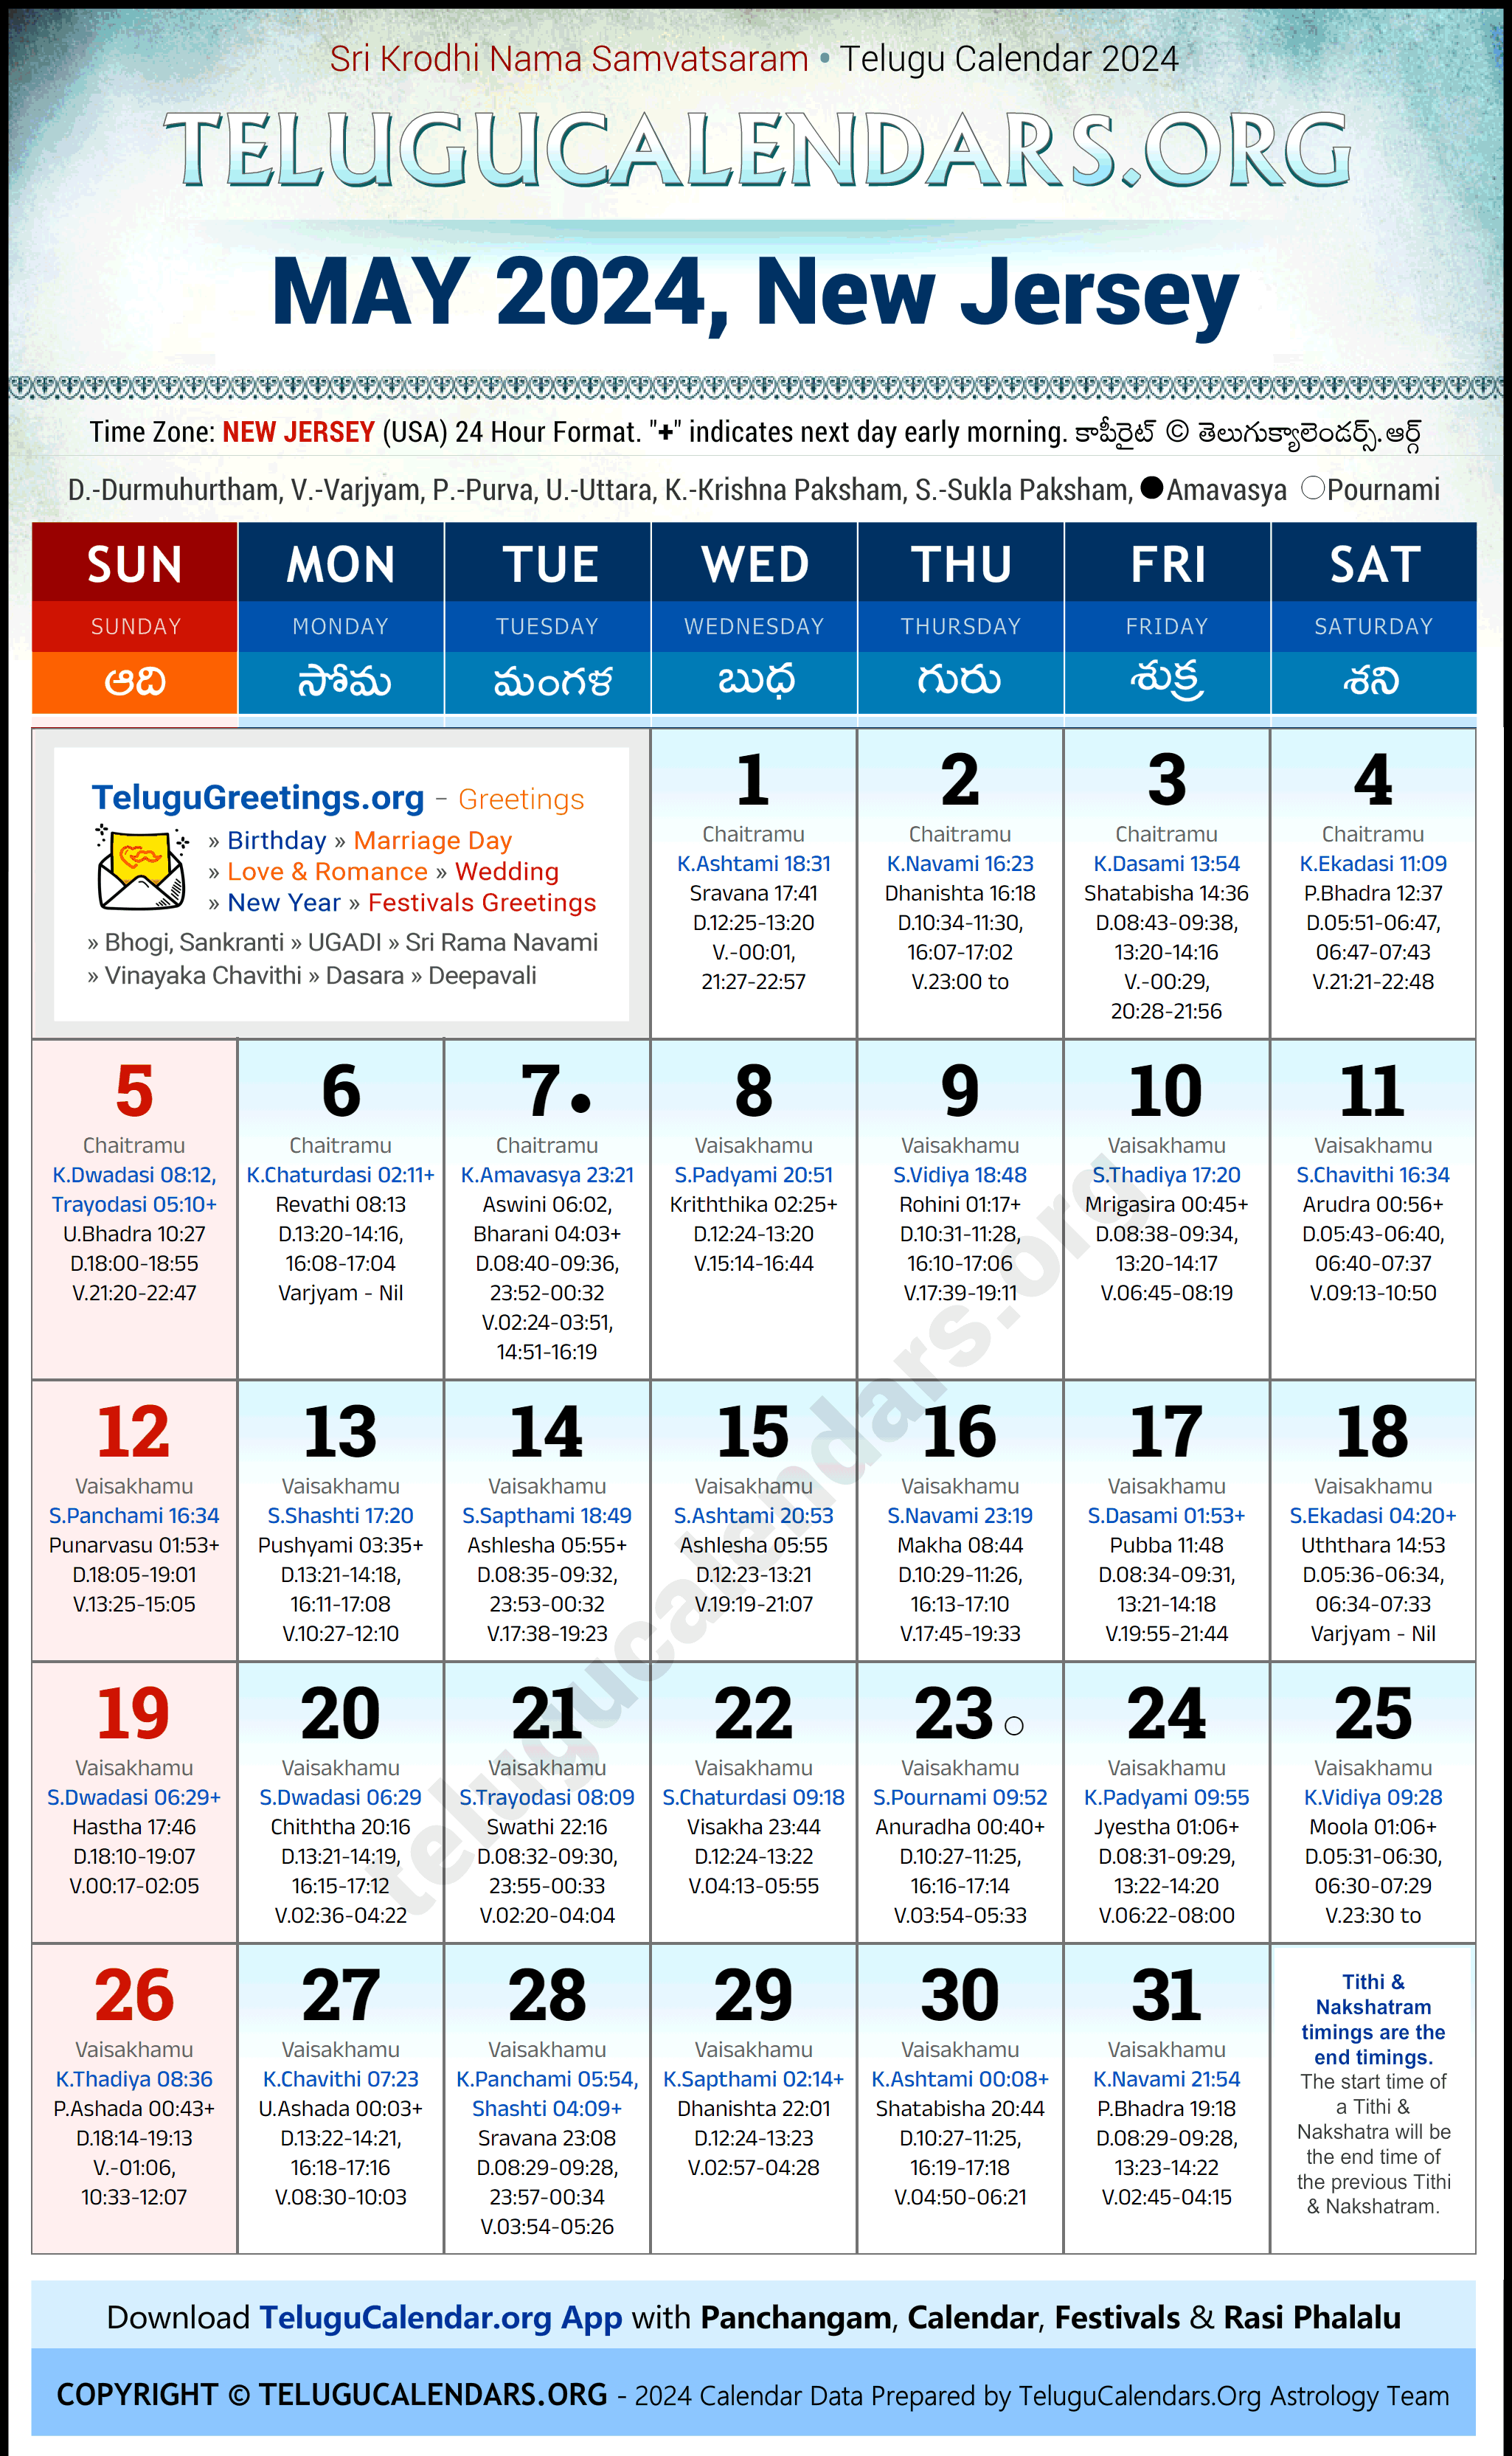 Telugu Calendar 2024 May Festivals for New Jersey